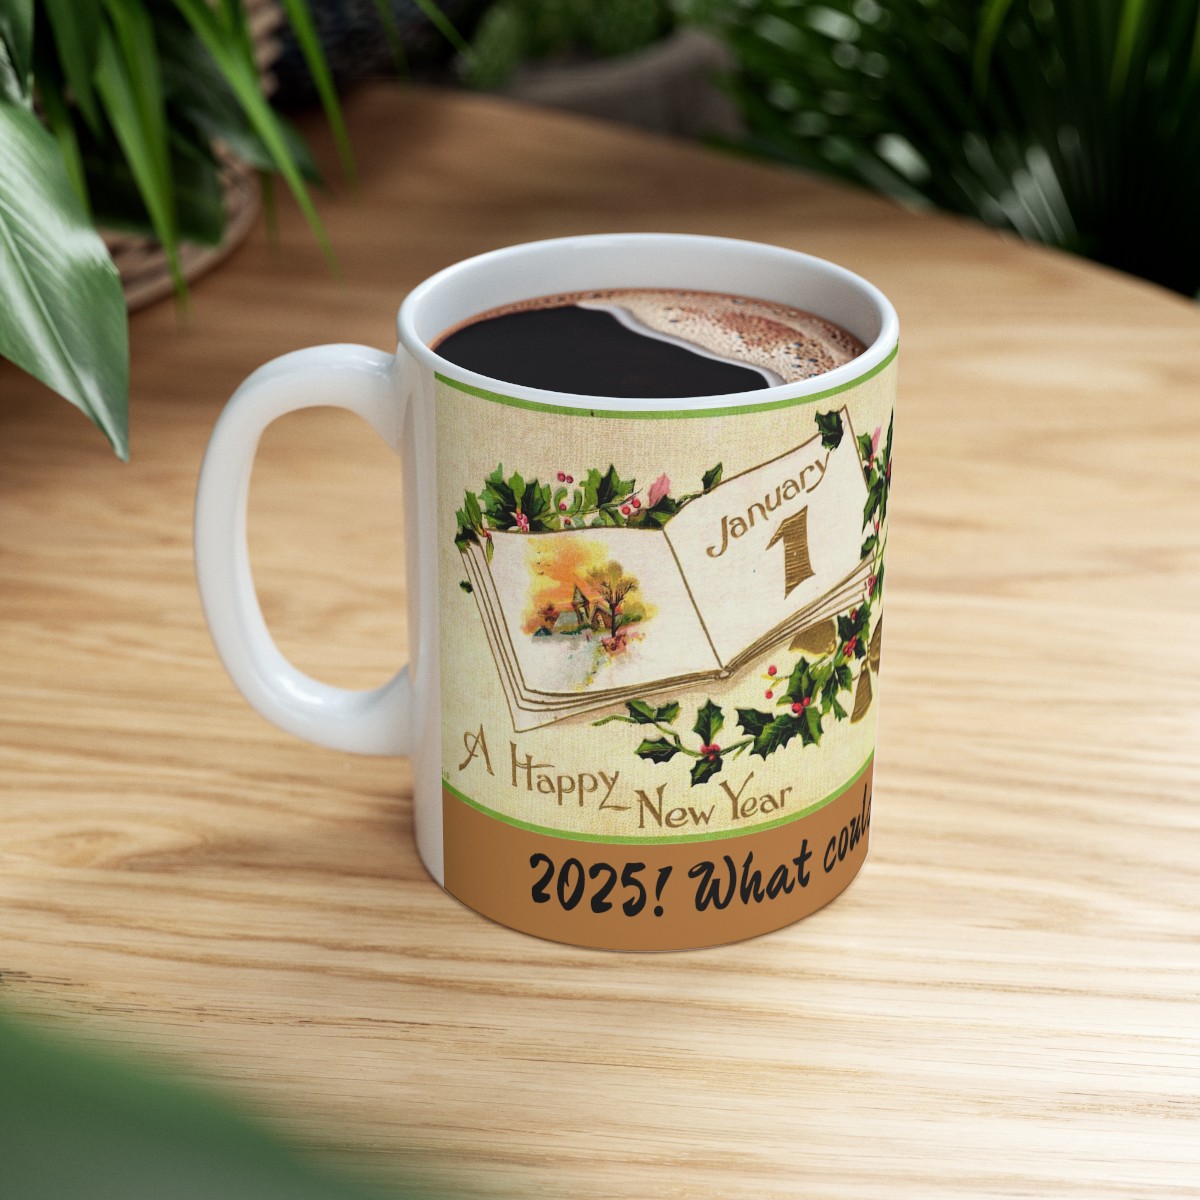 2025! What Could Possibly Go Wrong?  - Ceramic Postcard Mug product thumbnail image